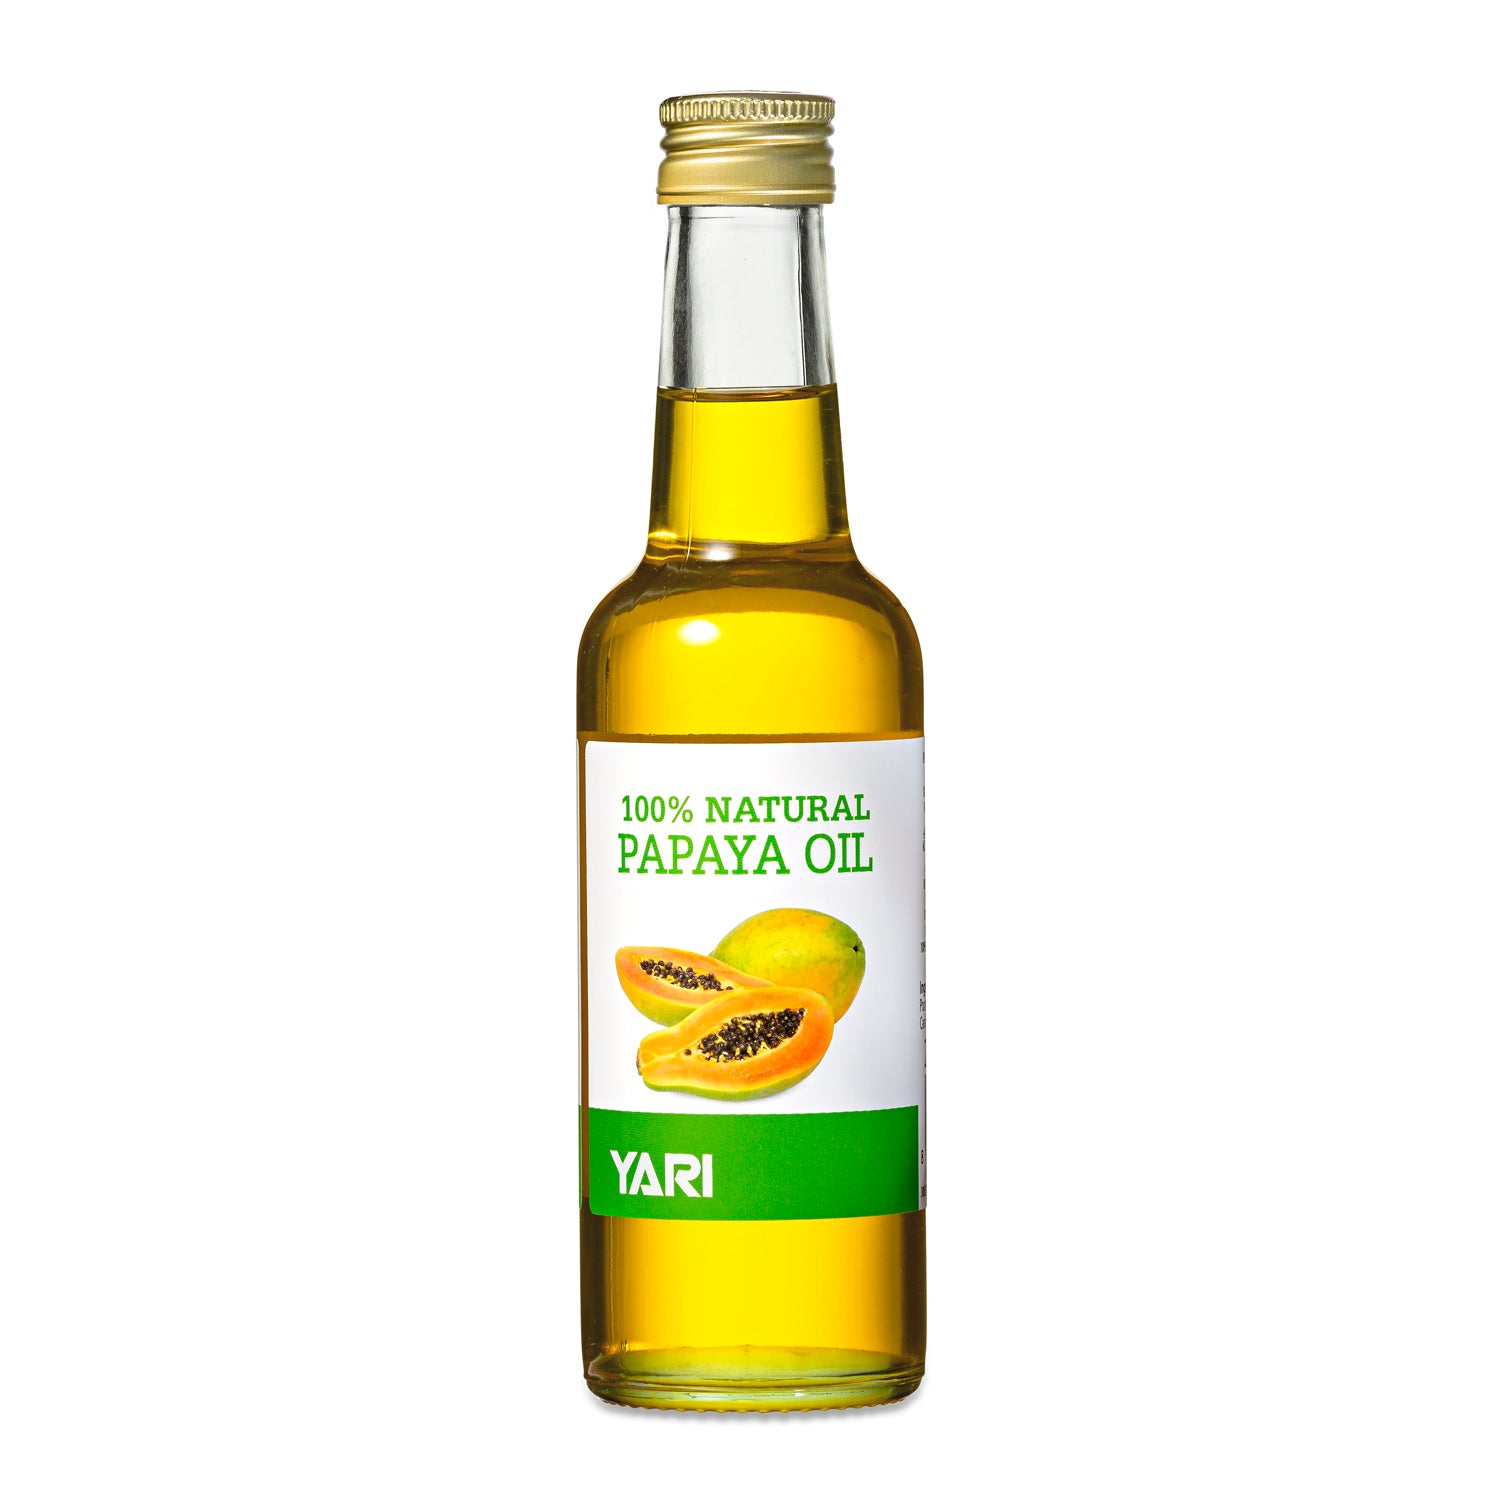 Yari - 100% Natural Papaya Oil 250ml